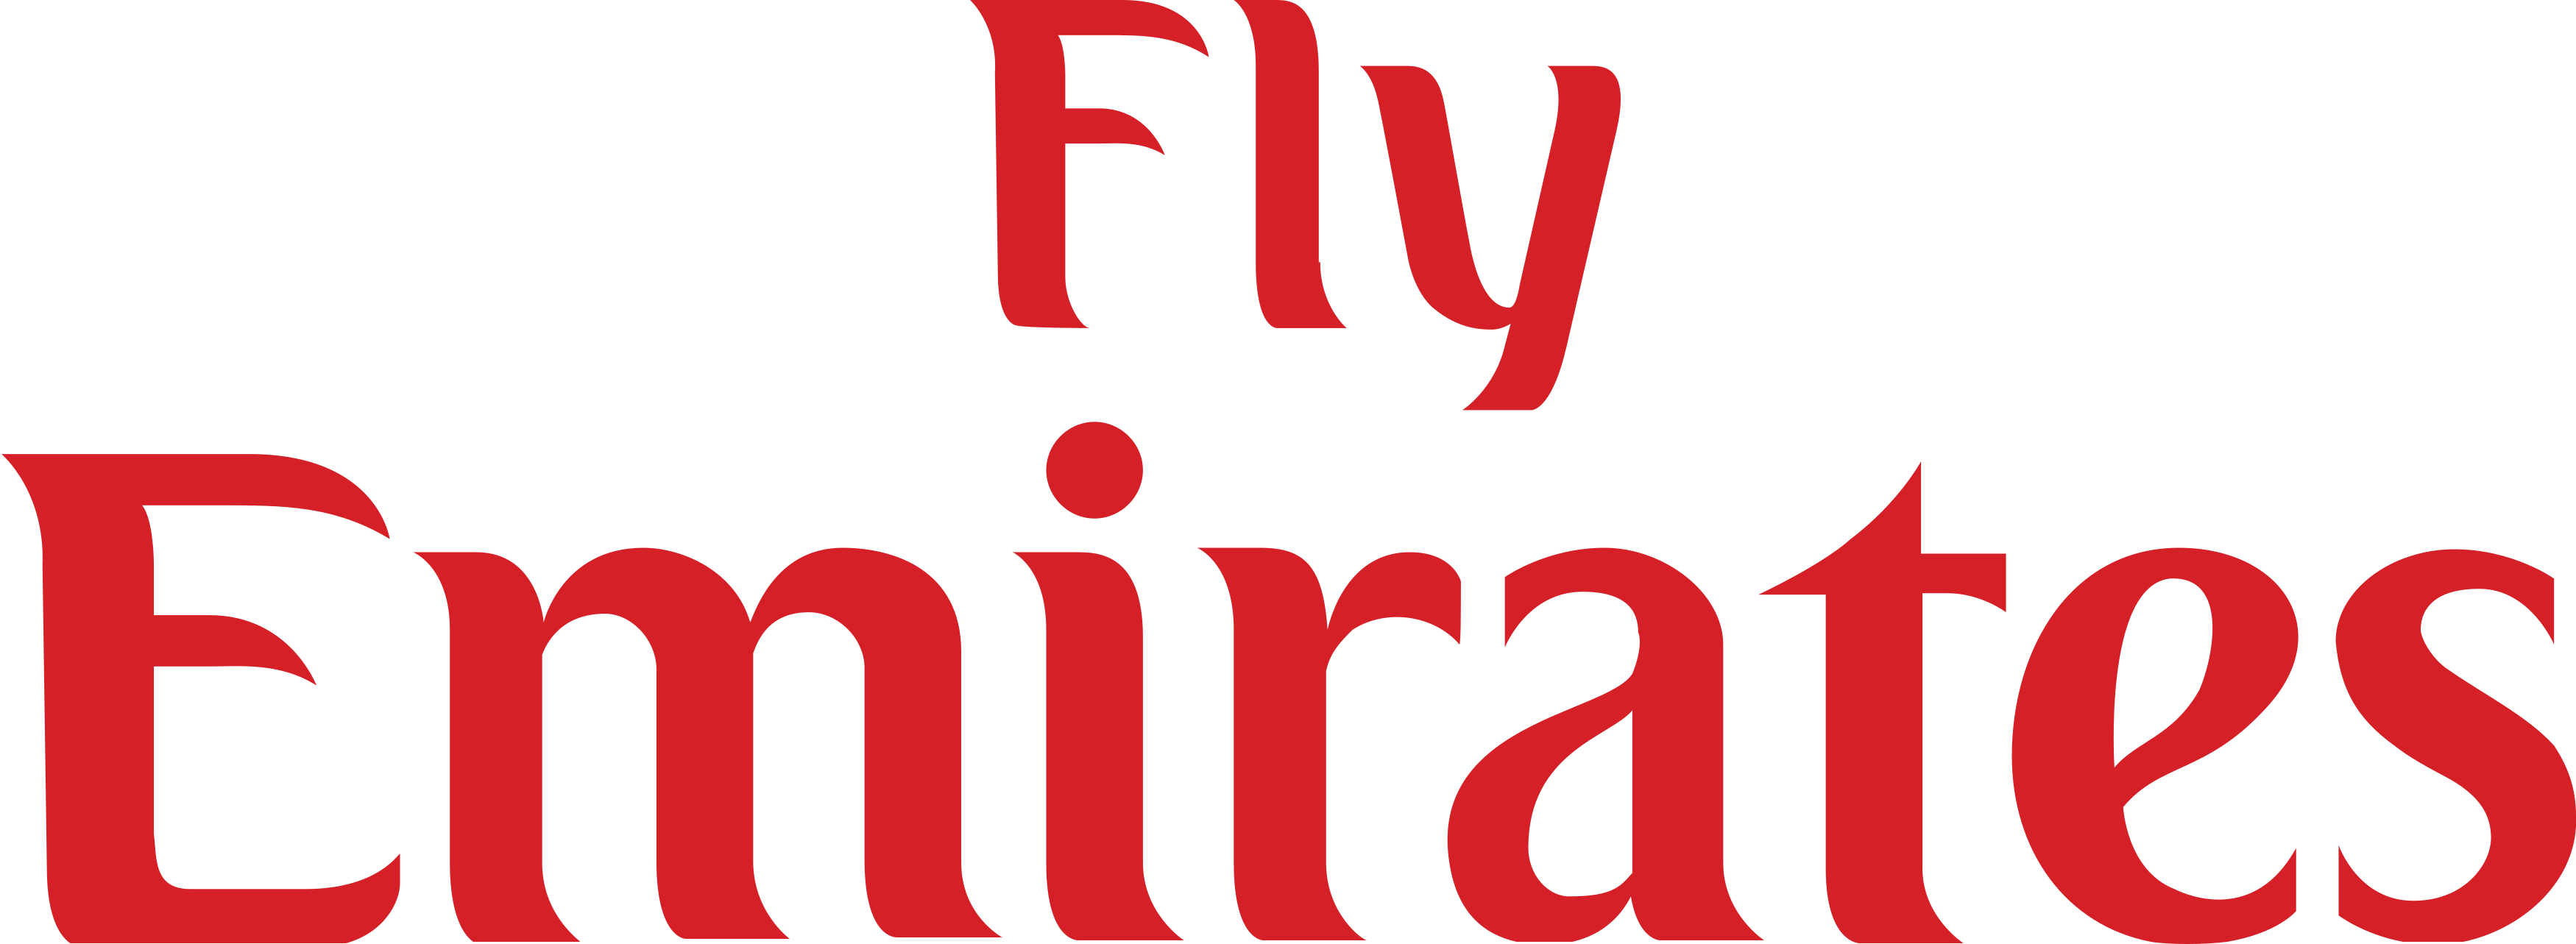 Fly Emirates Logo – PNG e Vetor – Download de Logo